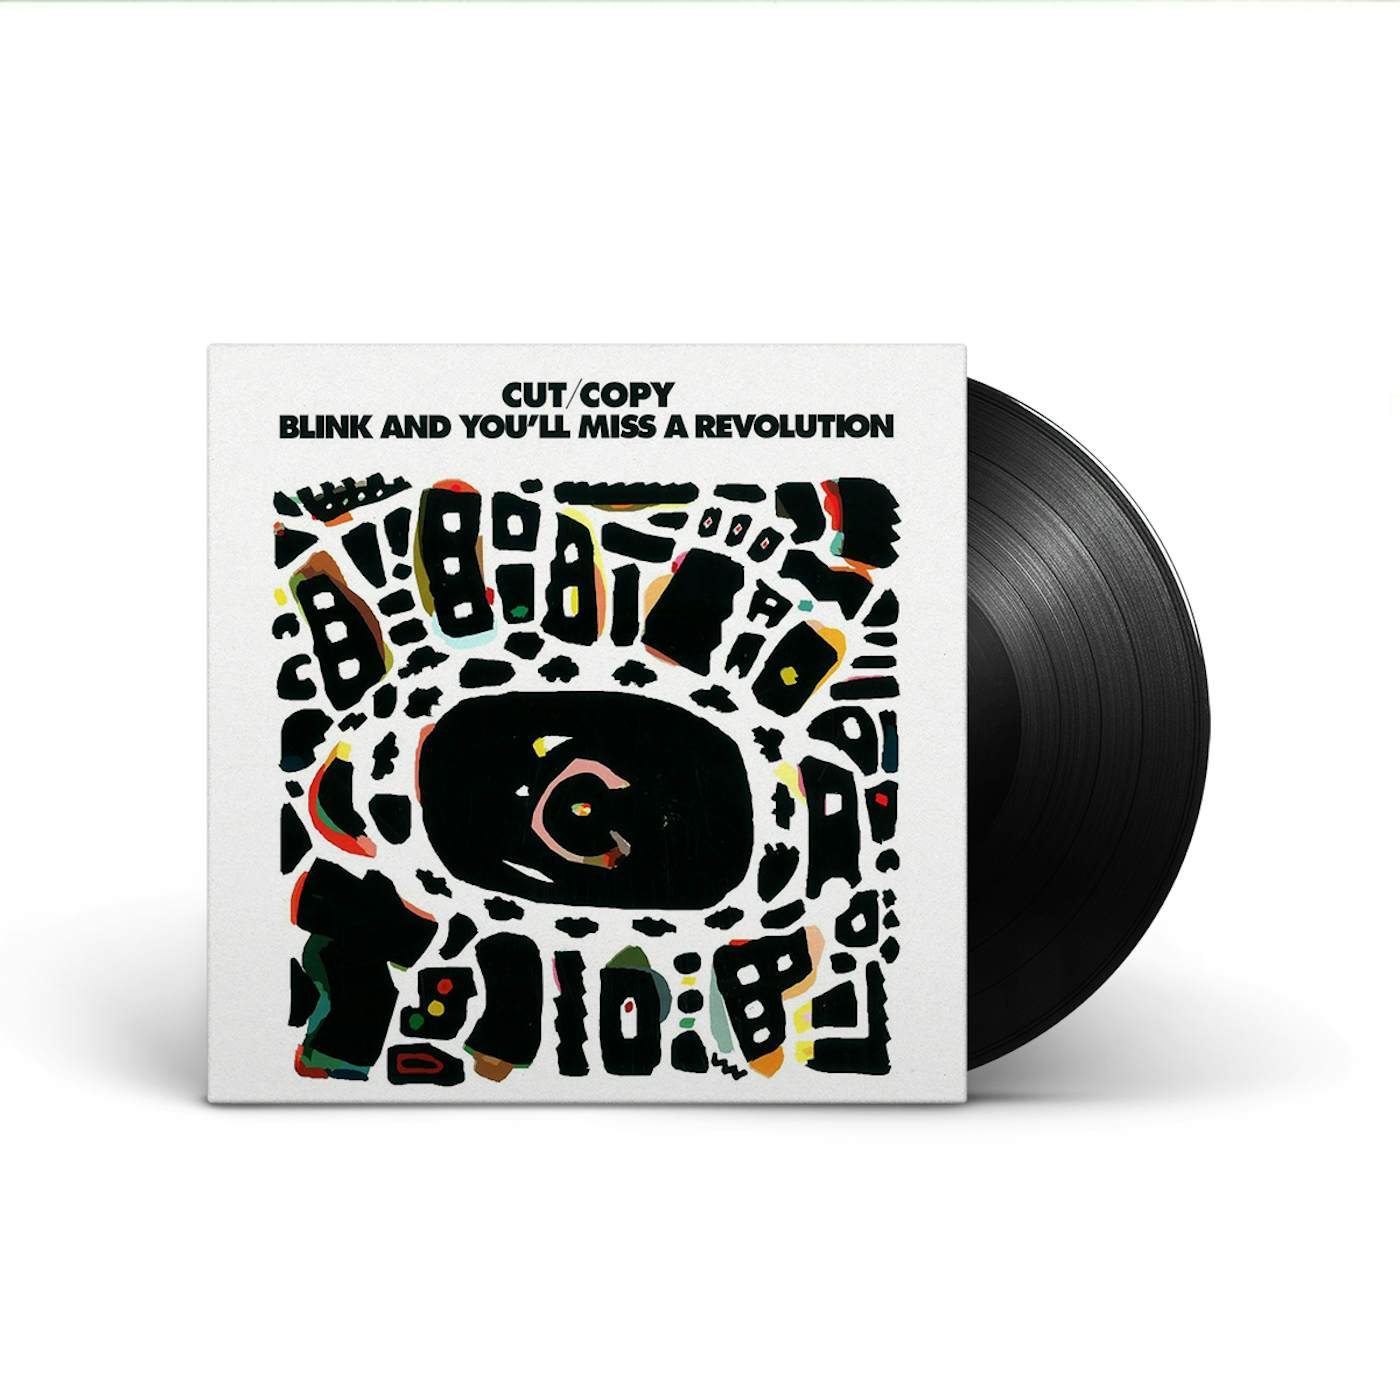 Cut Copy - Blink And You'll Miss A Revolution LP (Vinyl)